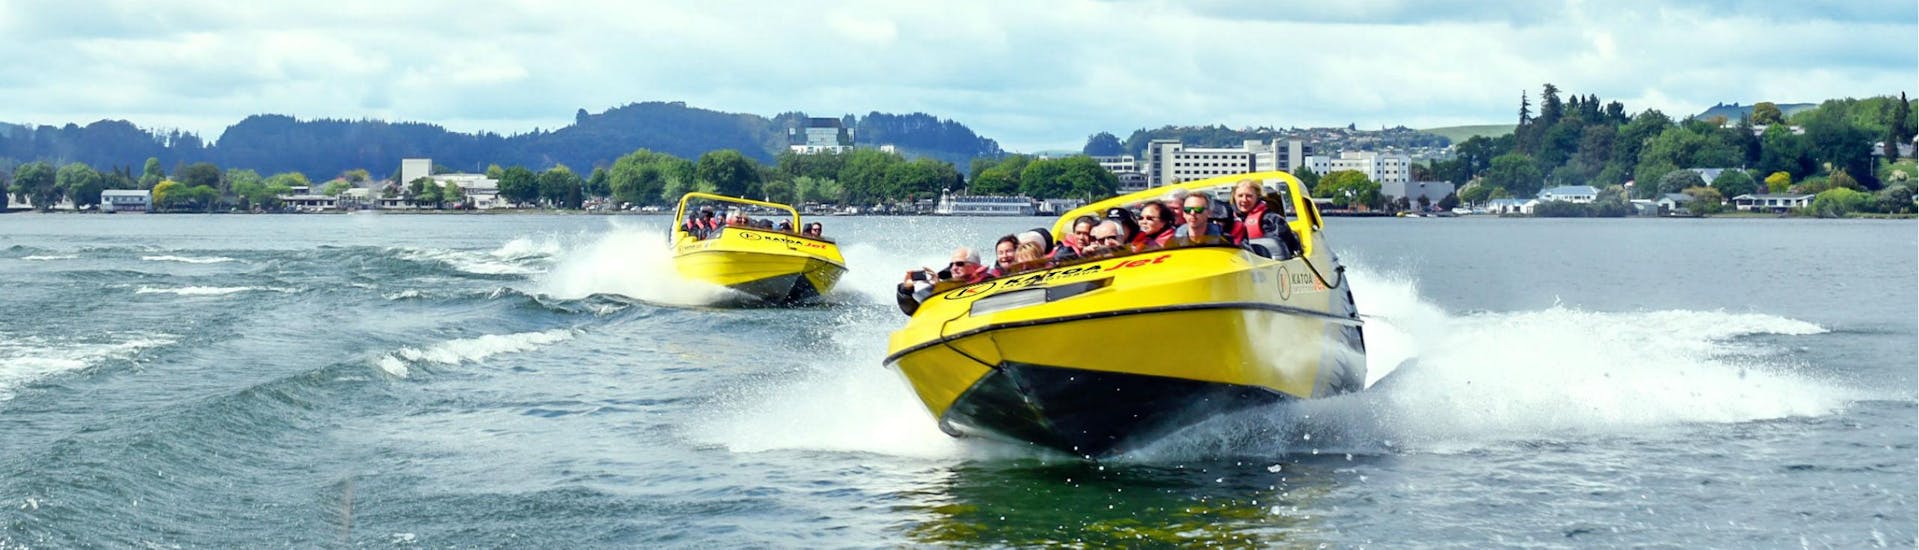 Two groups of people can be seen Jet Boating in Rotorua with Katoa Lake Rotorua.